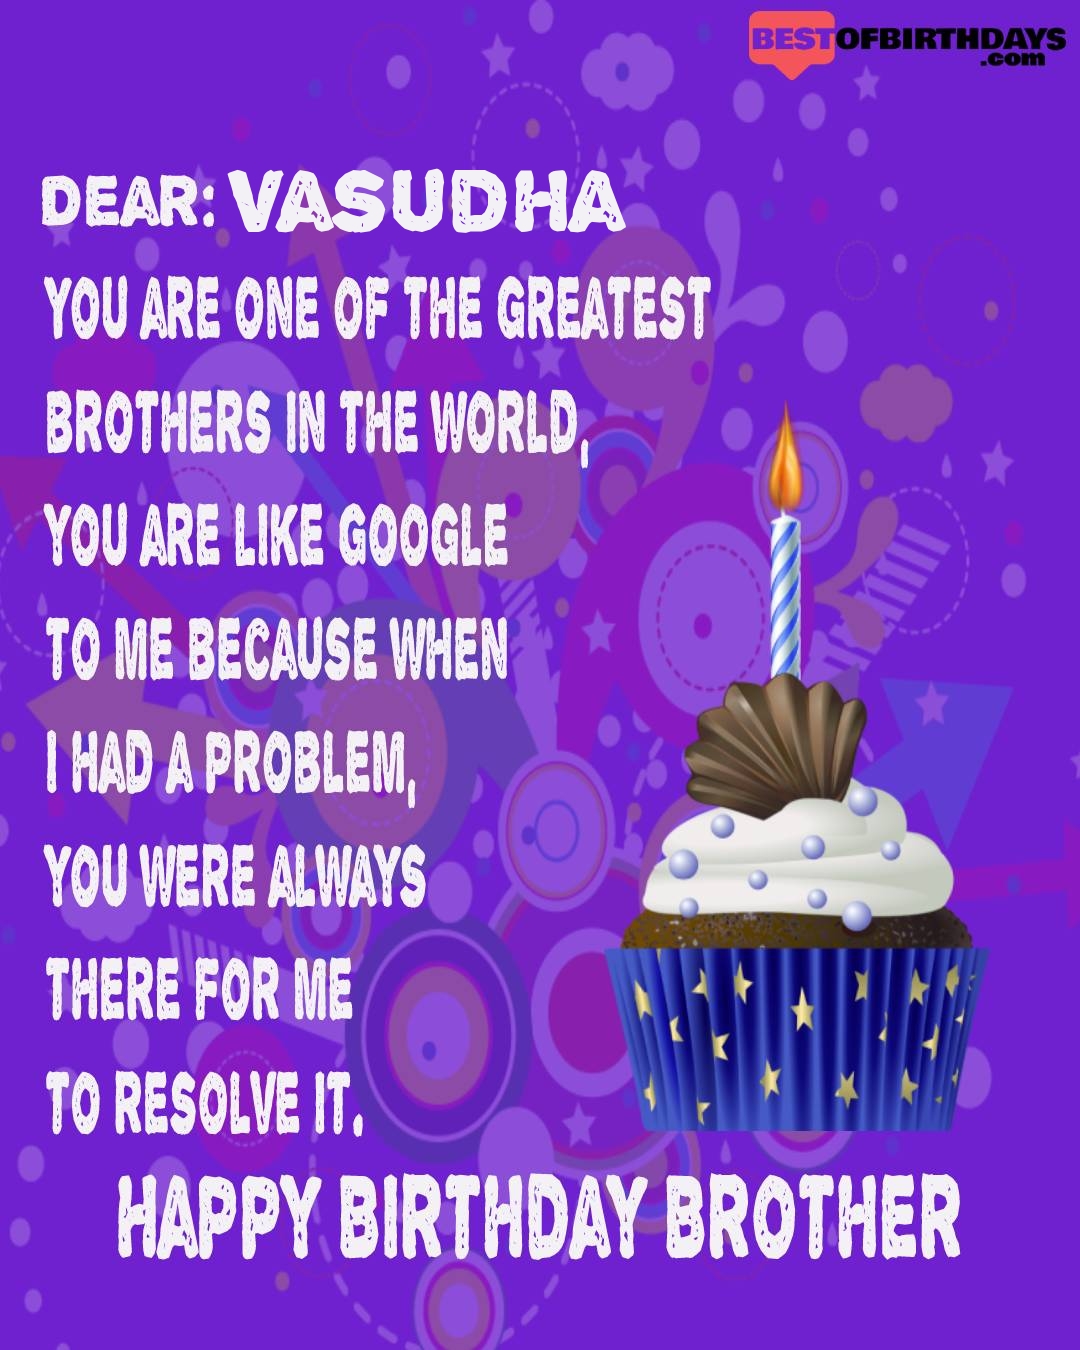 Happy birthday vasudha bhai brother bro